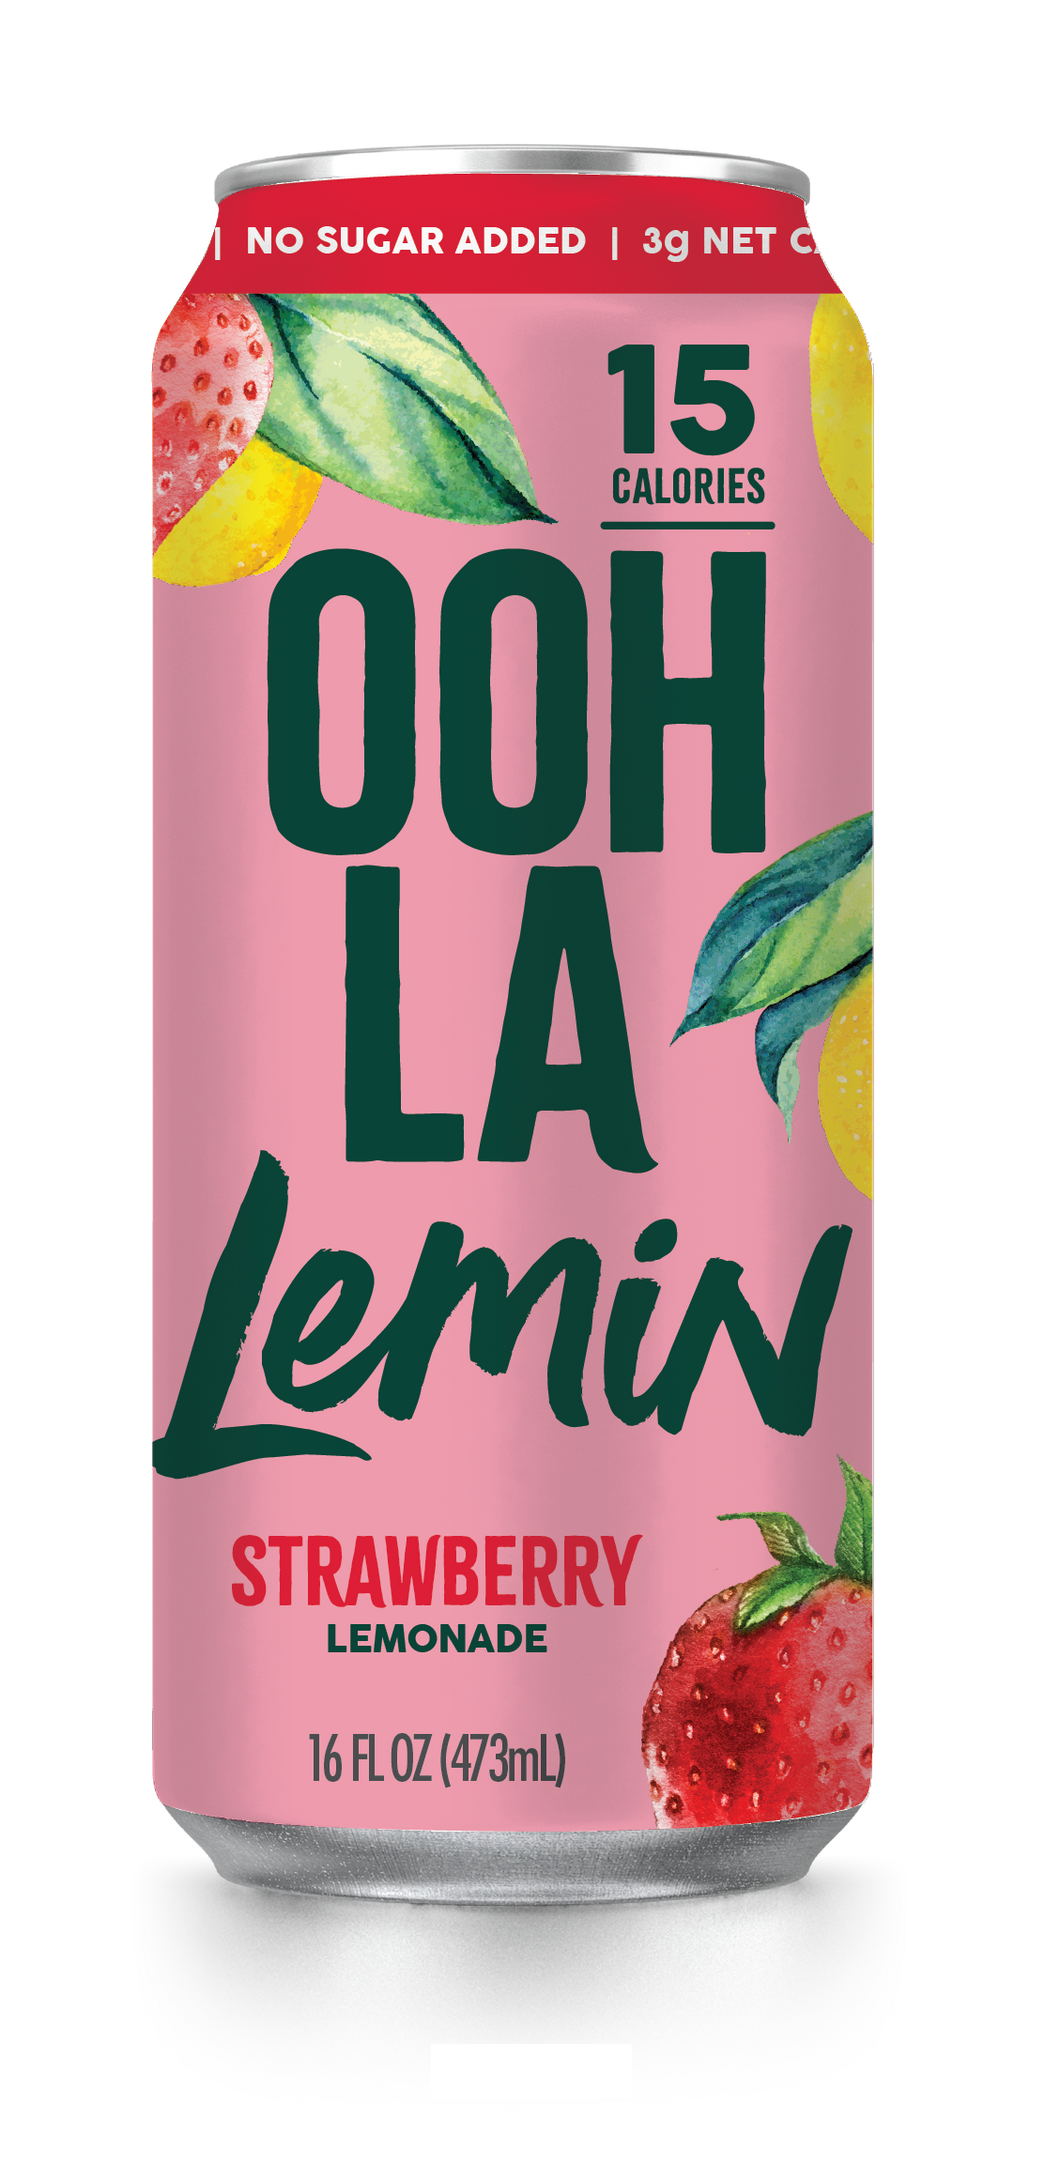 12-Pack OOH LA Lemin Strawberry Lemonade